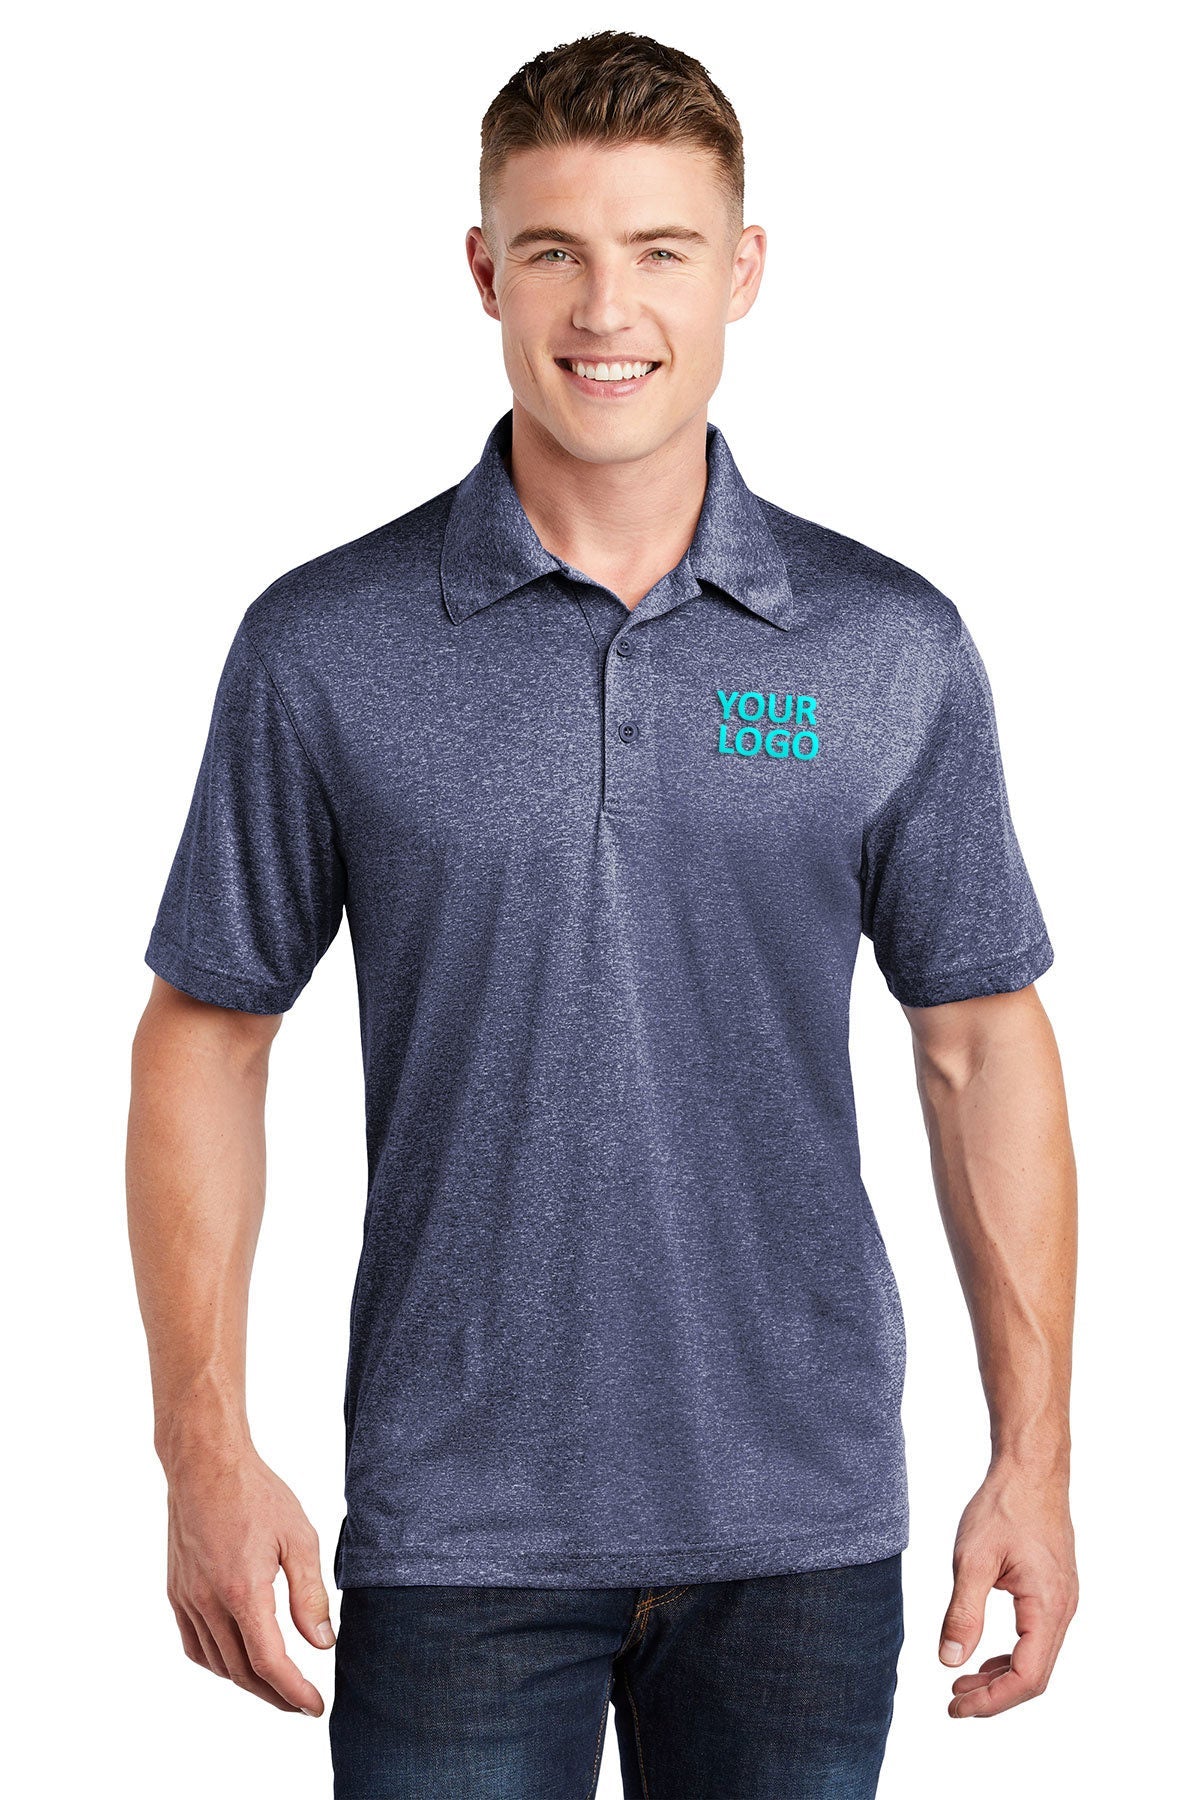 Sport-Tek True Navy Heather ST660 polo work shirts with company logo